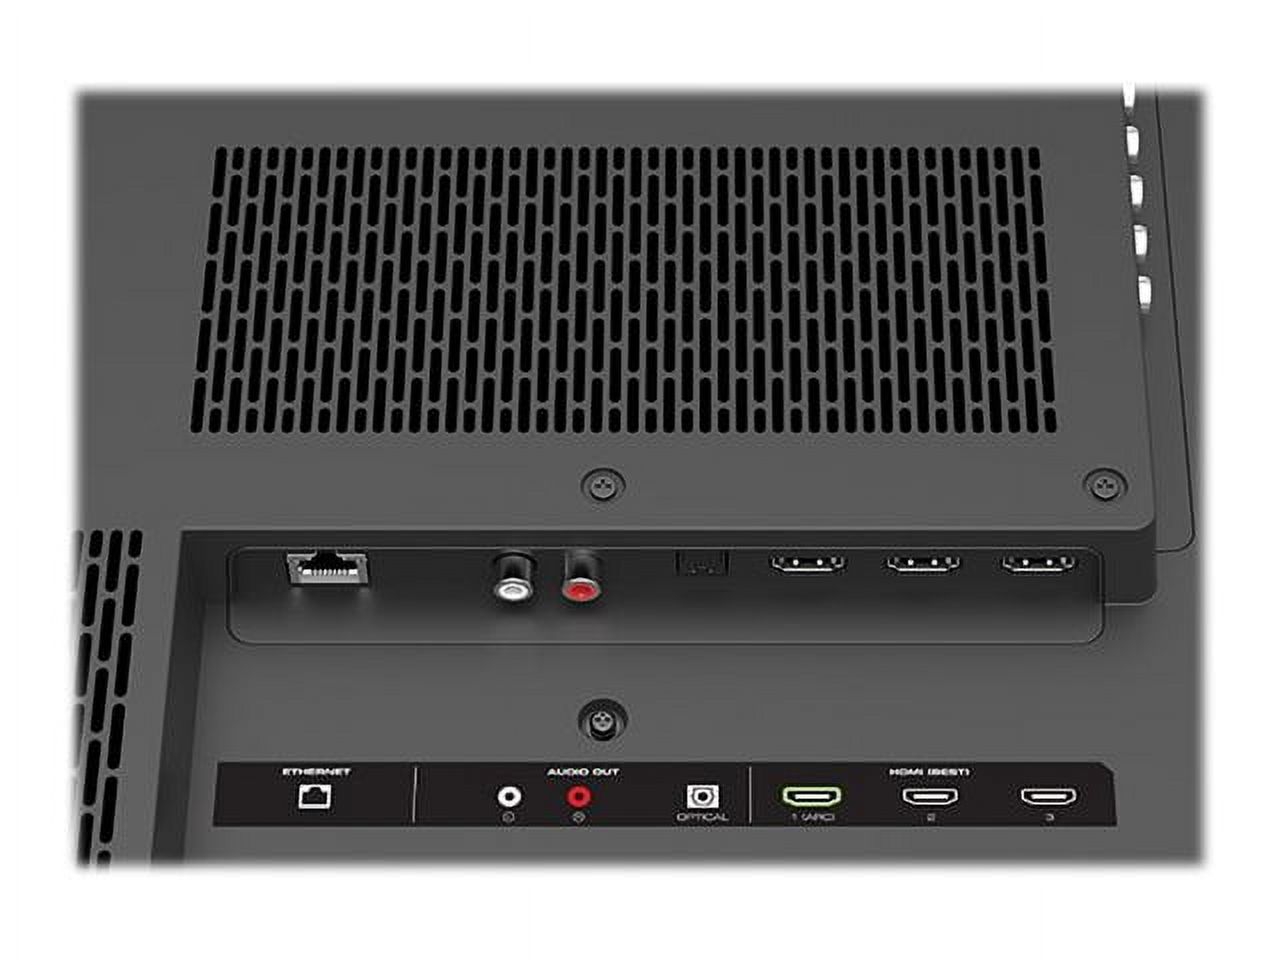 VIZIO SmartCast E-Series 65" Class (64.5" Diag.) Ultra HD 2160p 120Hz Full Array LED Smart Home Theater Display w/ Chromecast built-in (E65u-D3) - image 16 of 28